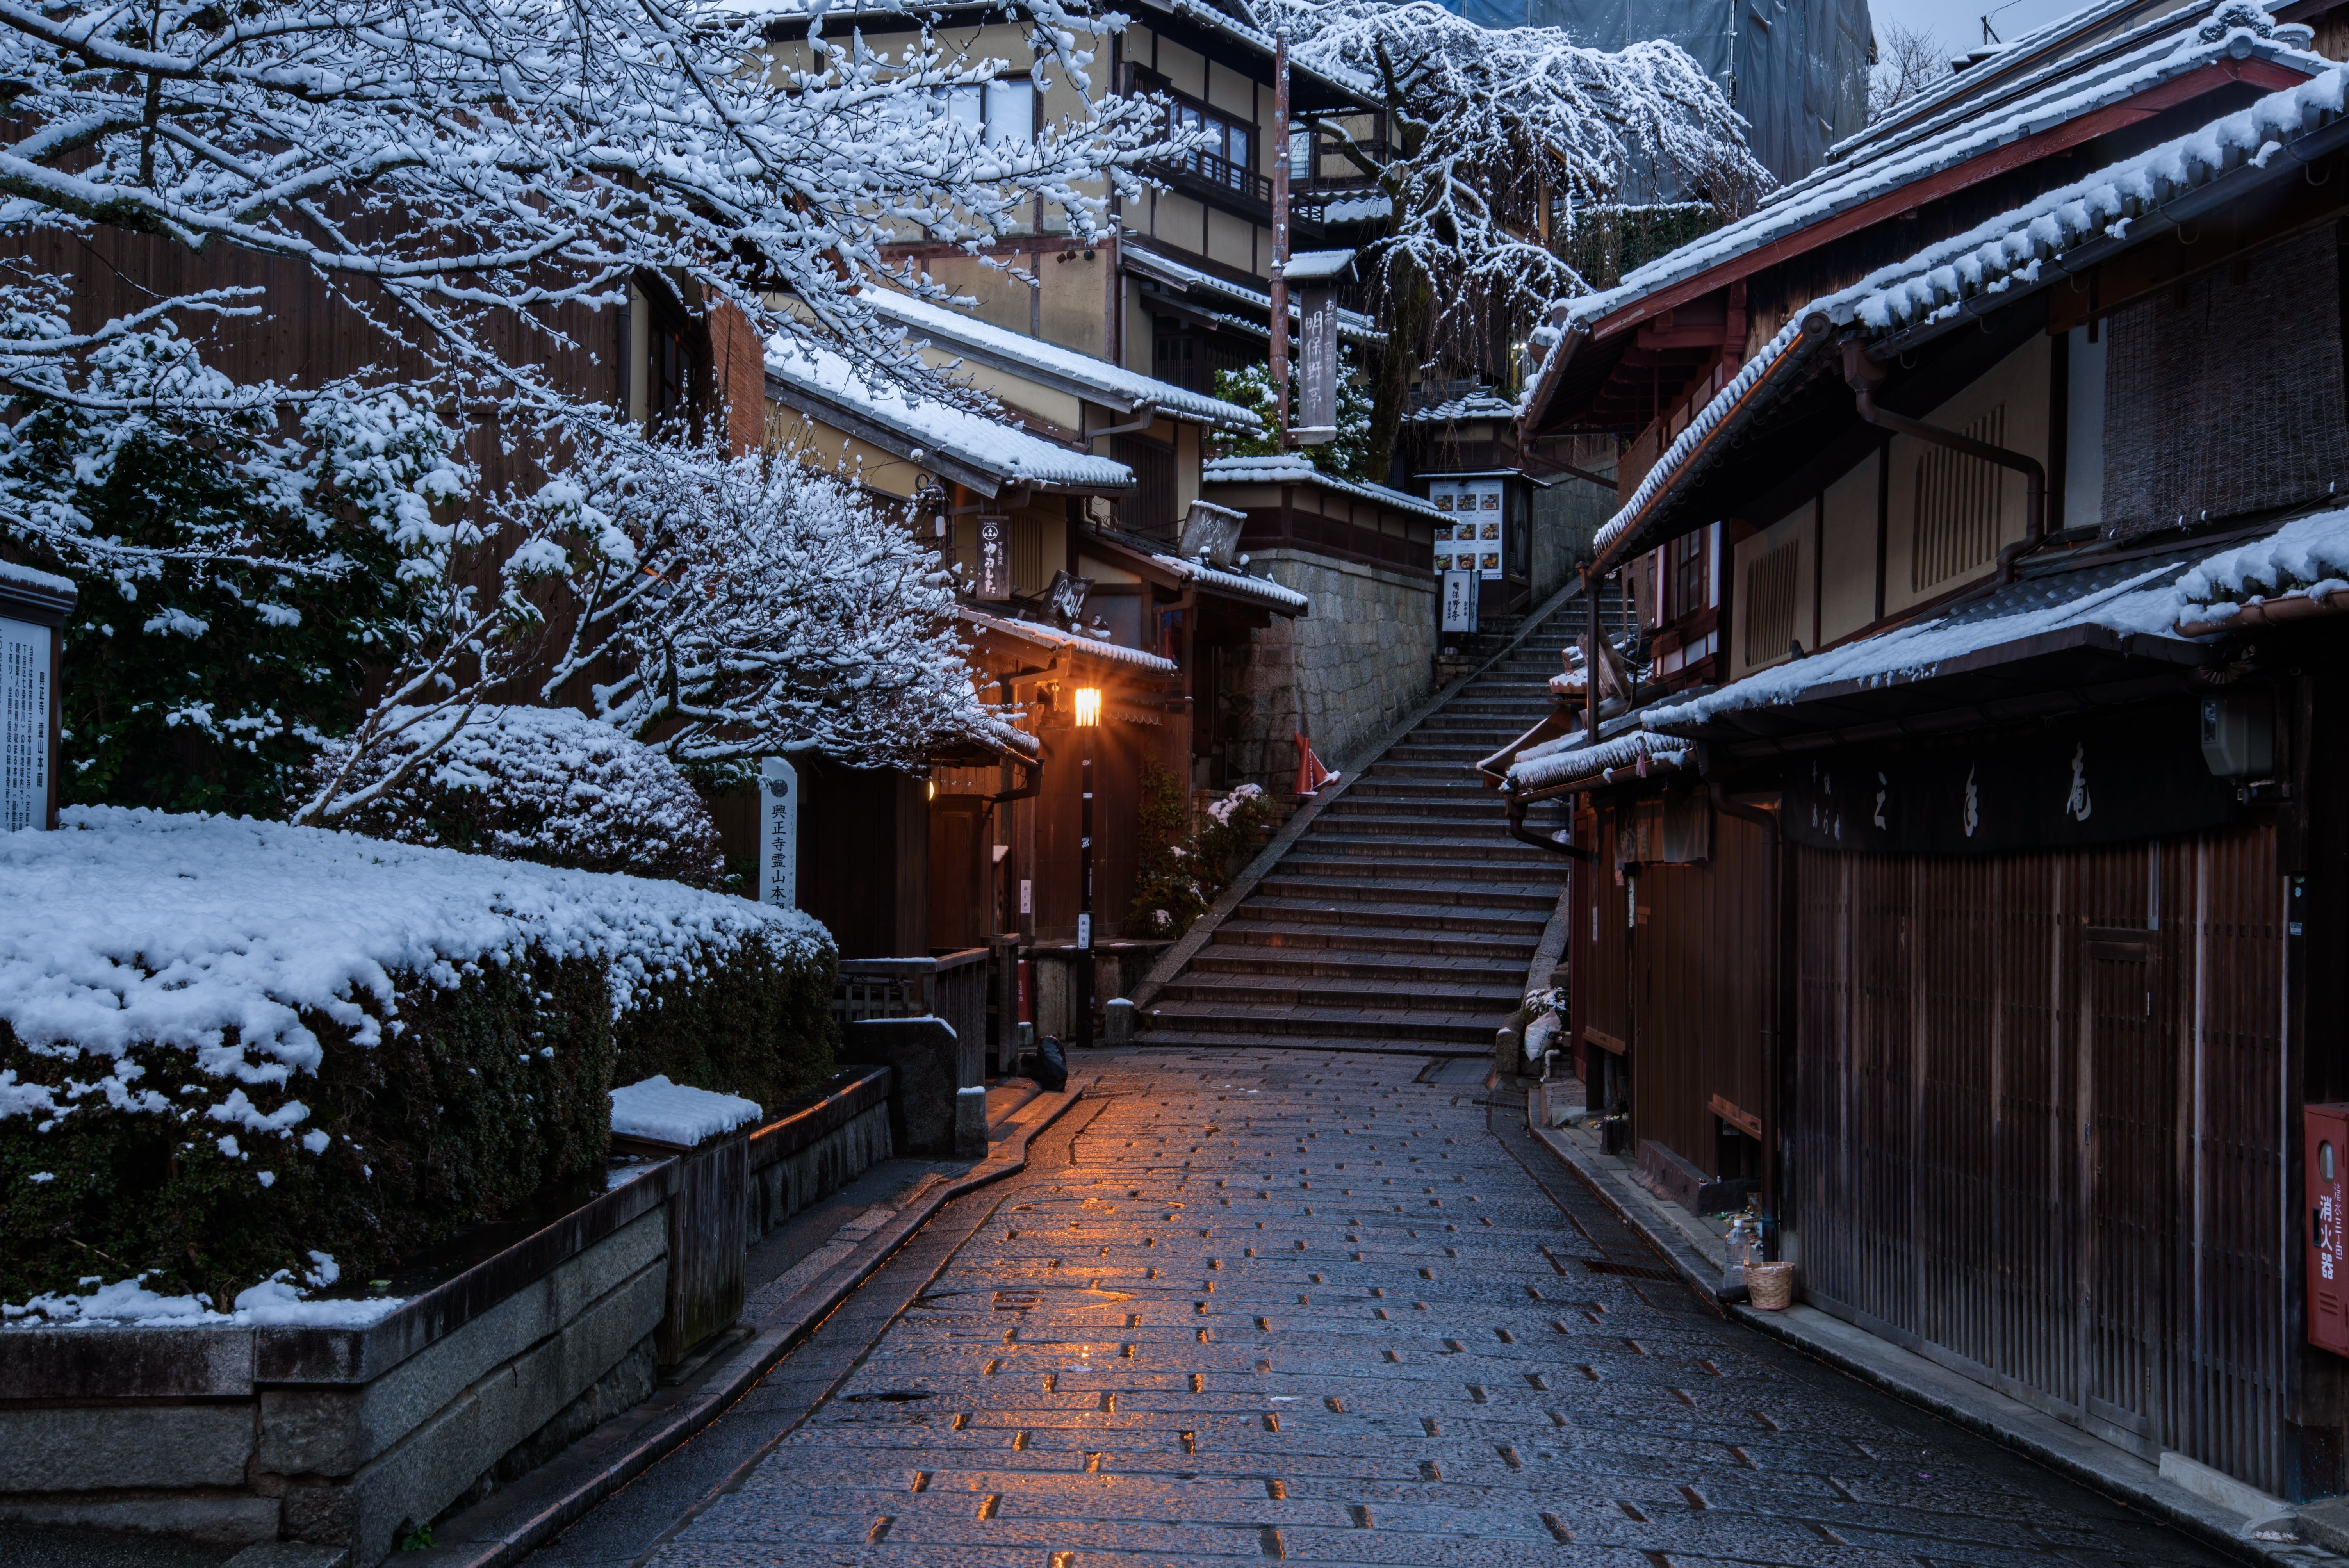 Home #Winter #Road The city #Japan #Snow #Ladder #Street #Kyoto K # wallpaper #hdwallpaper #desktop. Winter wallpaper hd, Winter wallpaper, Wallpaper